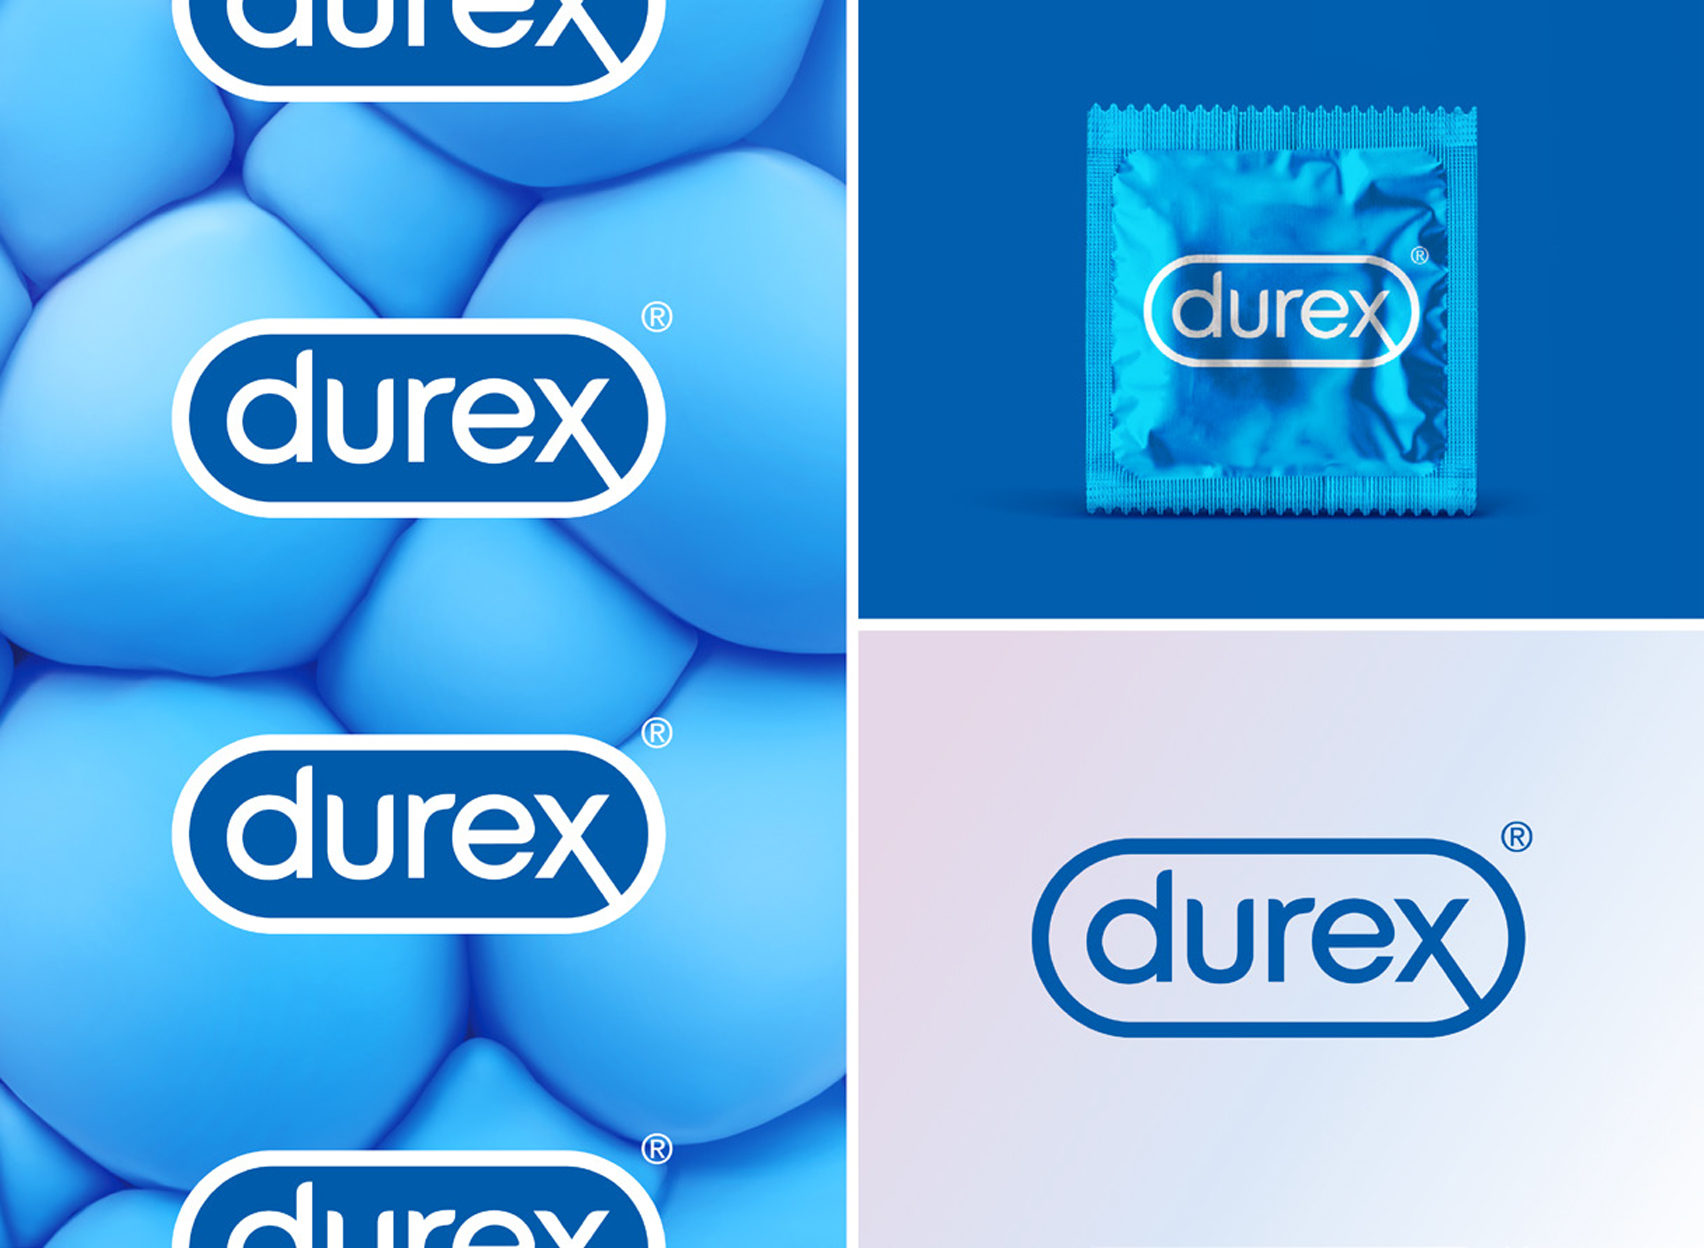 Ребрендинг, Логотип, Дизайн упаковки, Durex